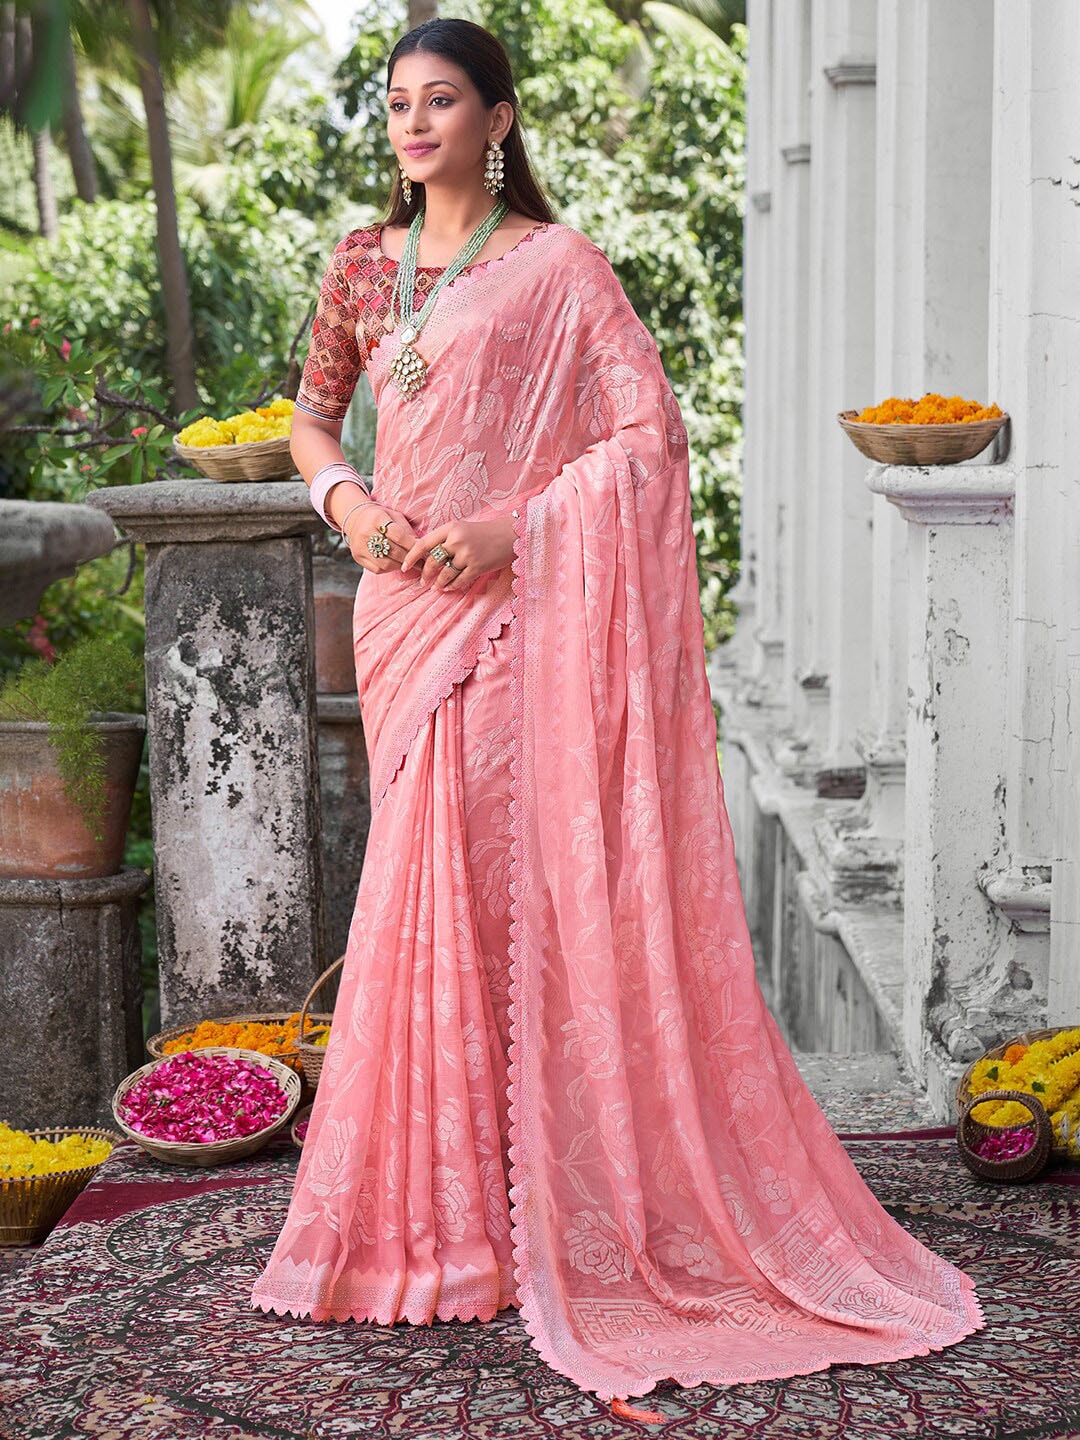 Saree mall Floral Woven Design Pure Chiffon Beads & Stones Bagru Sarees Price in India